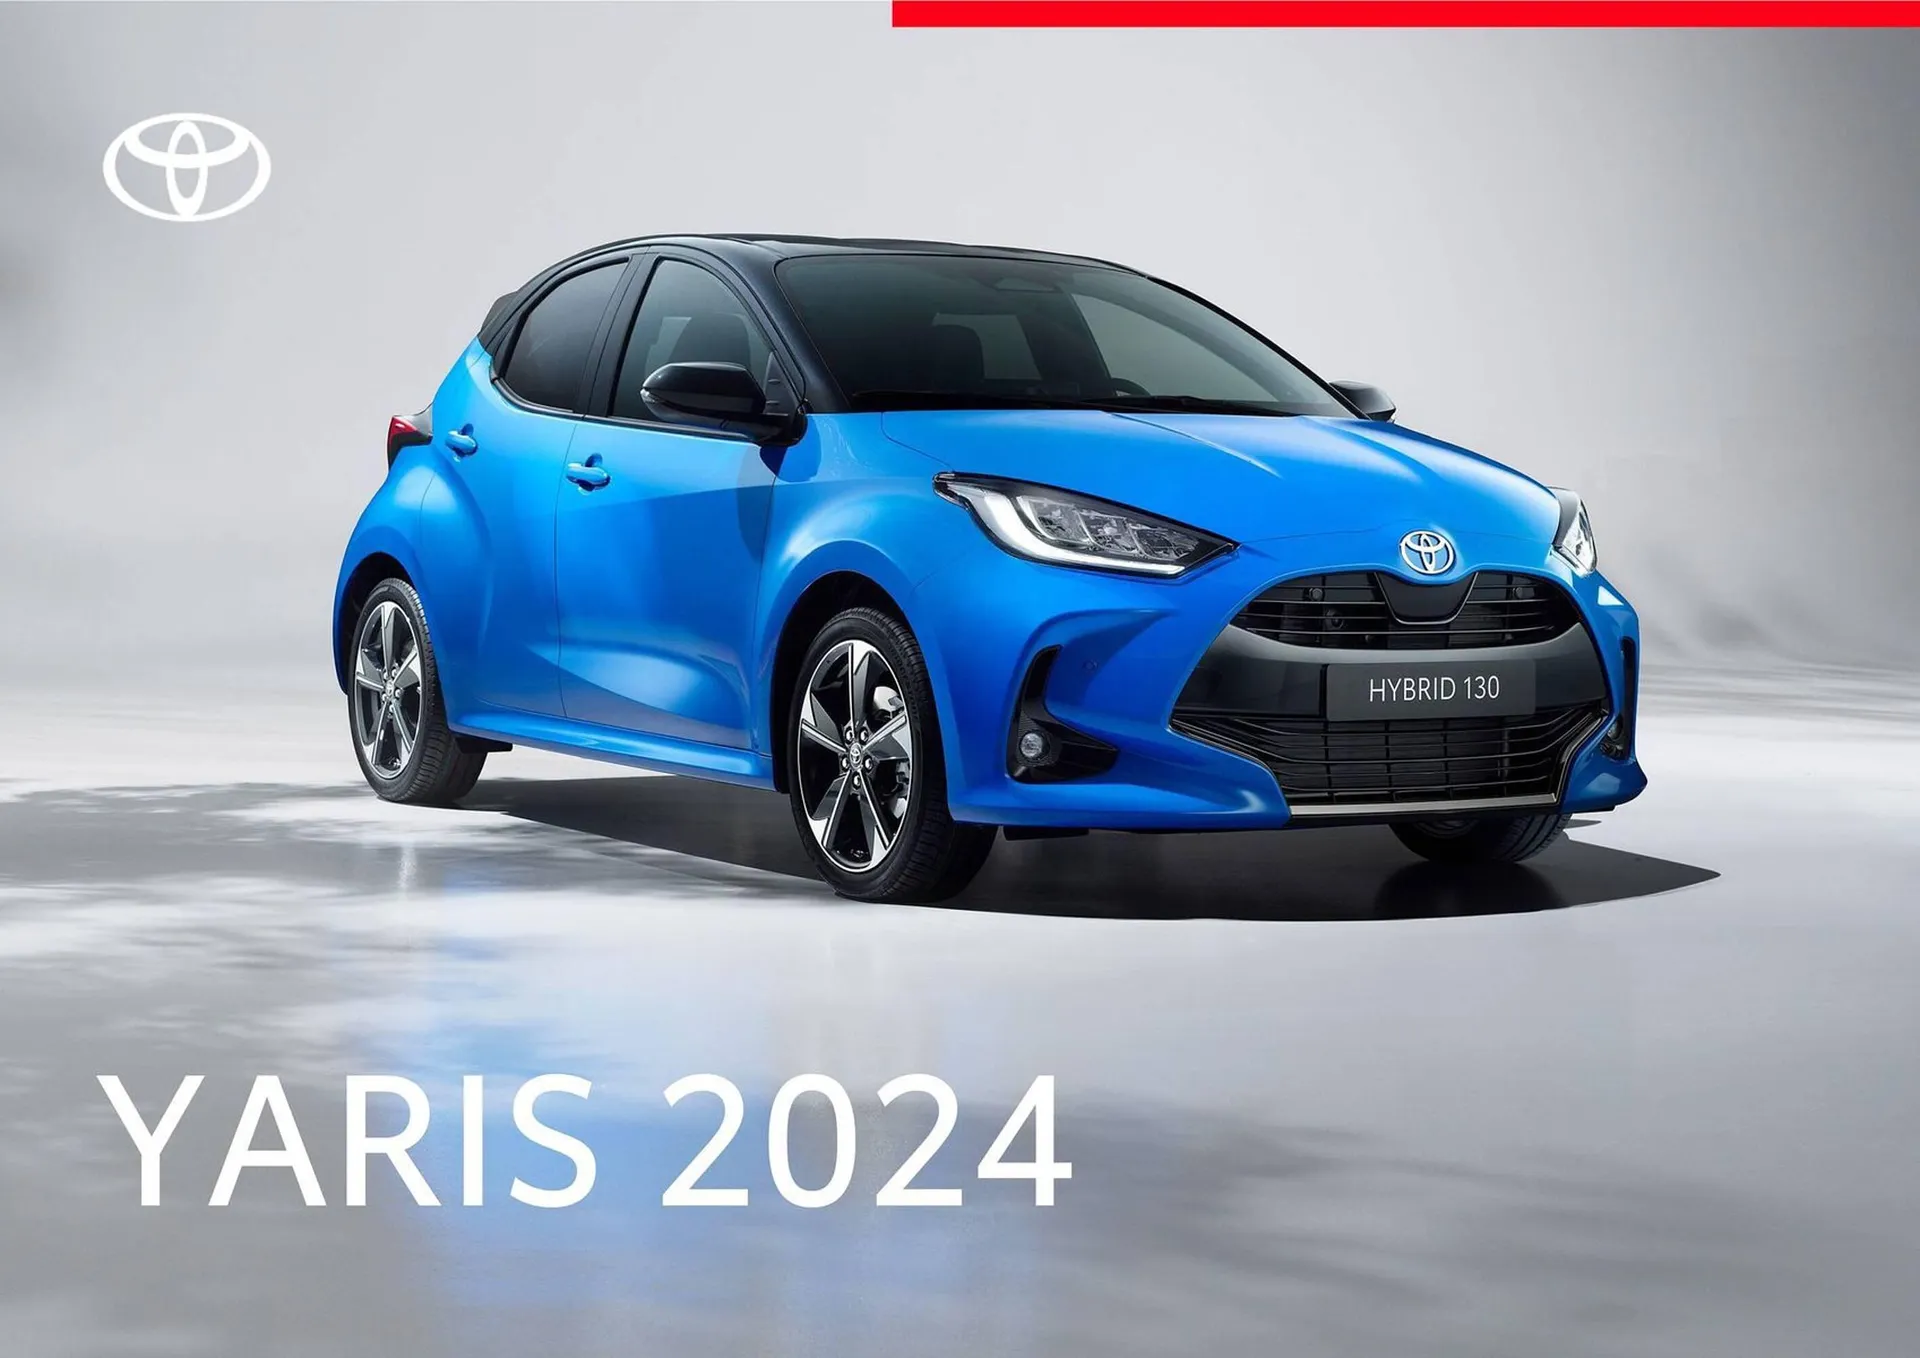 Toyota Yaris Flugblatt von 14. März bis 14. März 2025 - Flugblätt seite  1